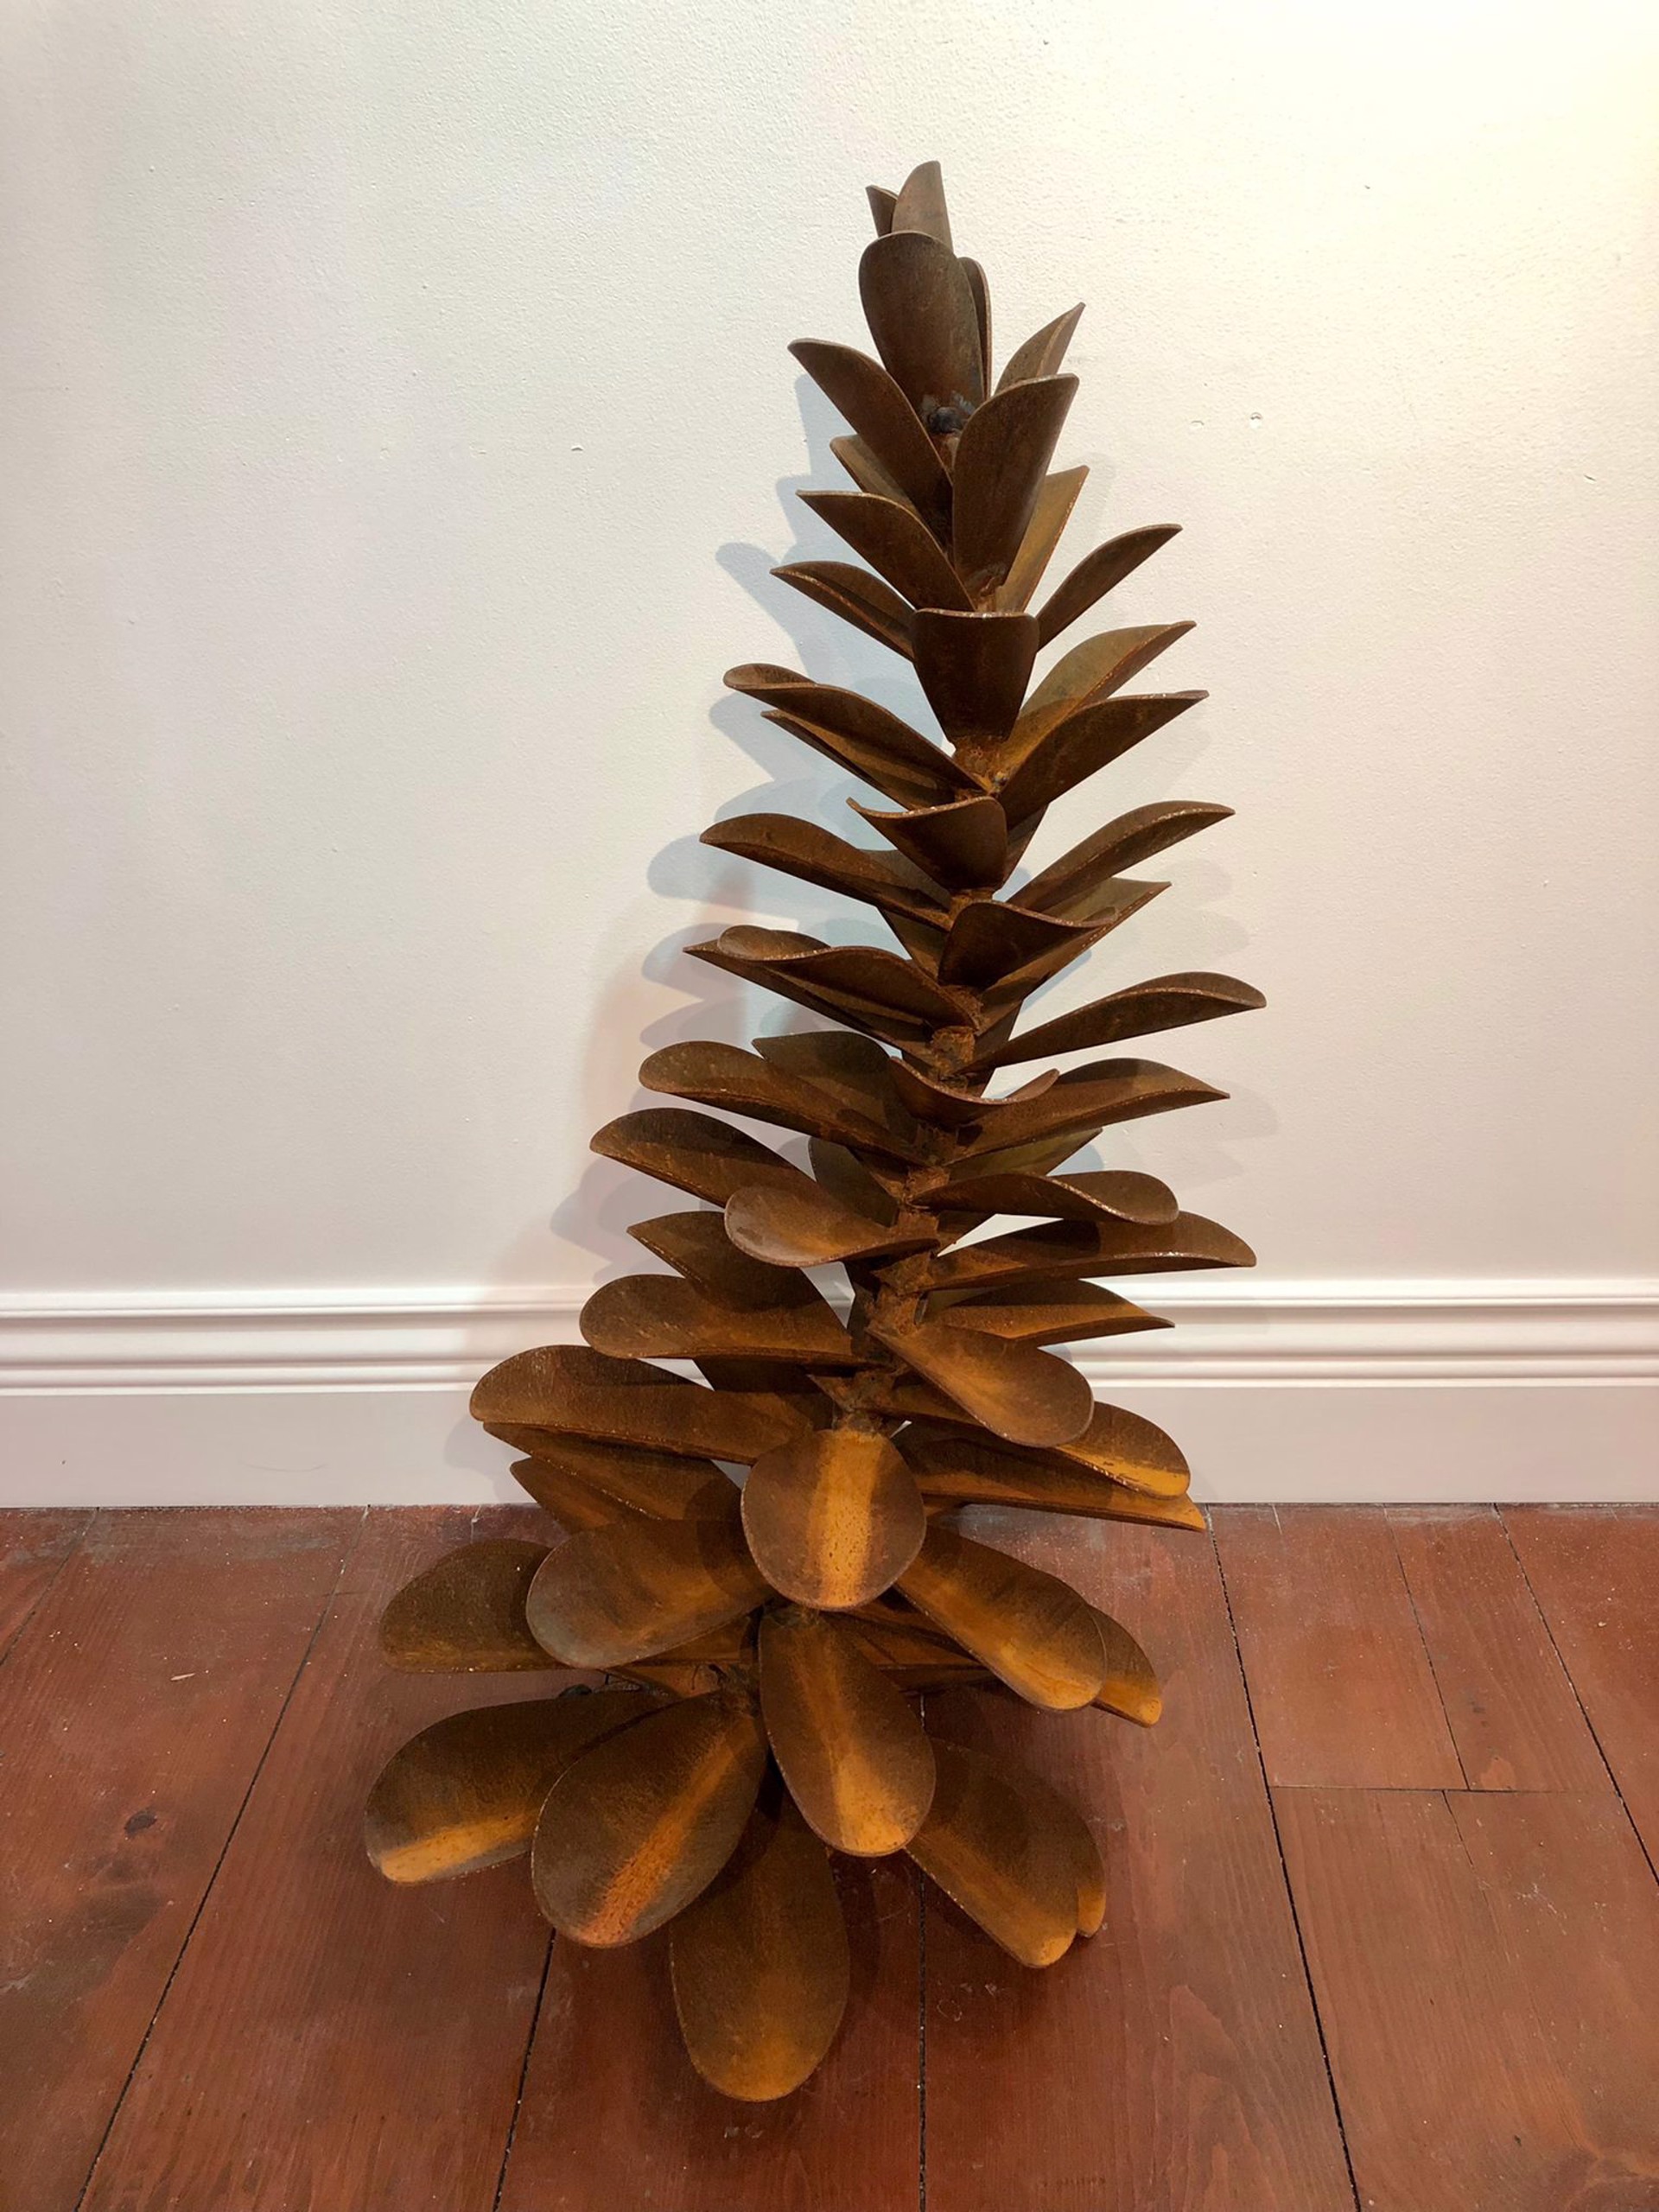 Pine Cone 21-490 by Floyd Elzinga